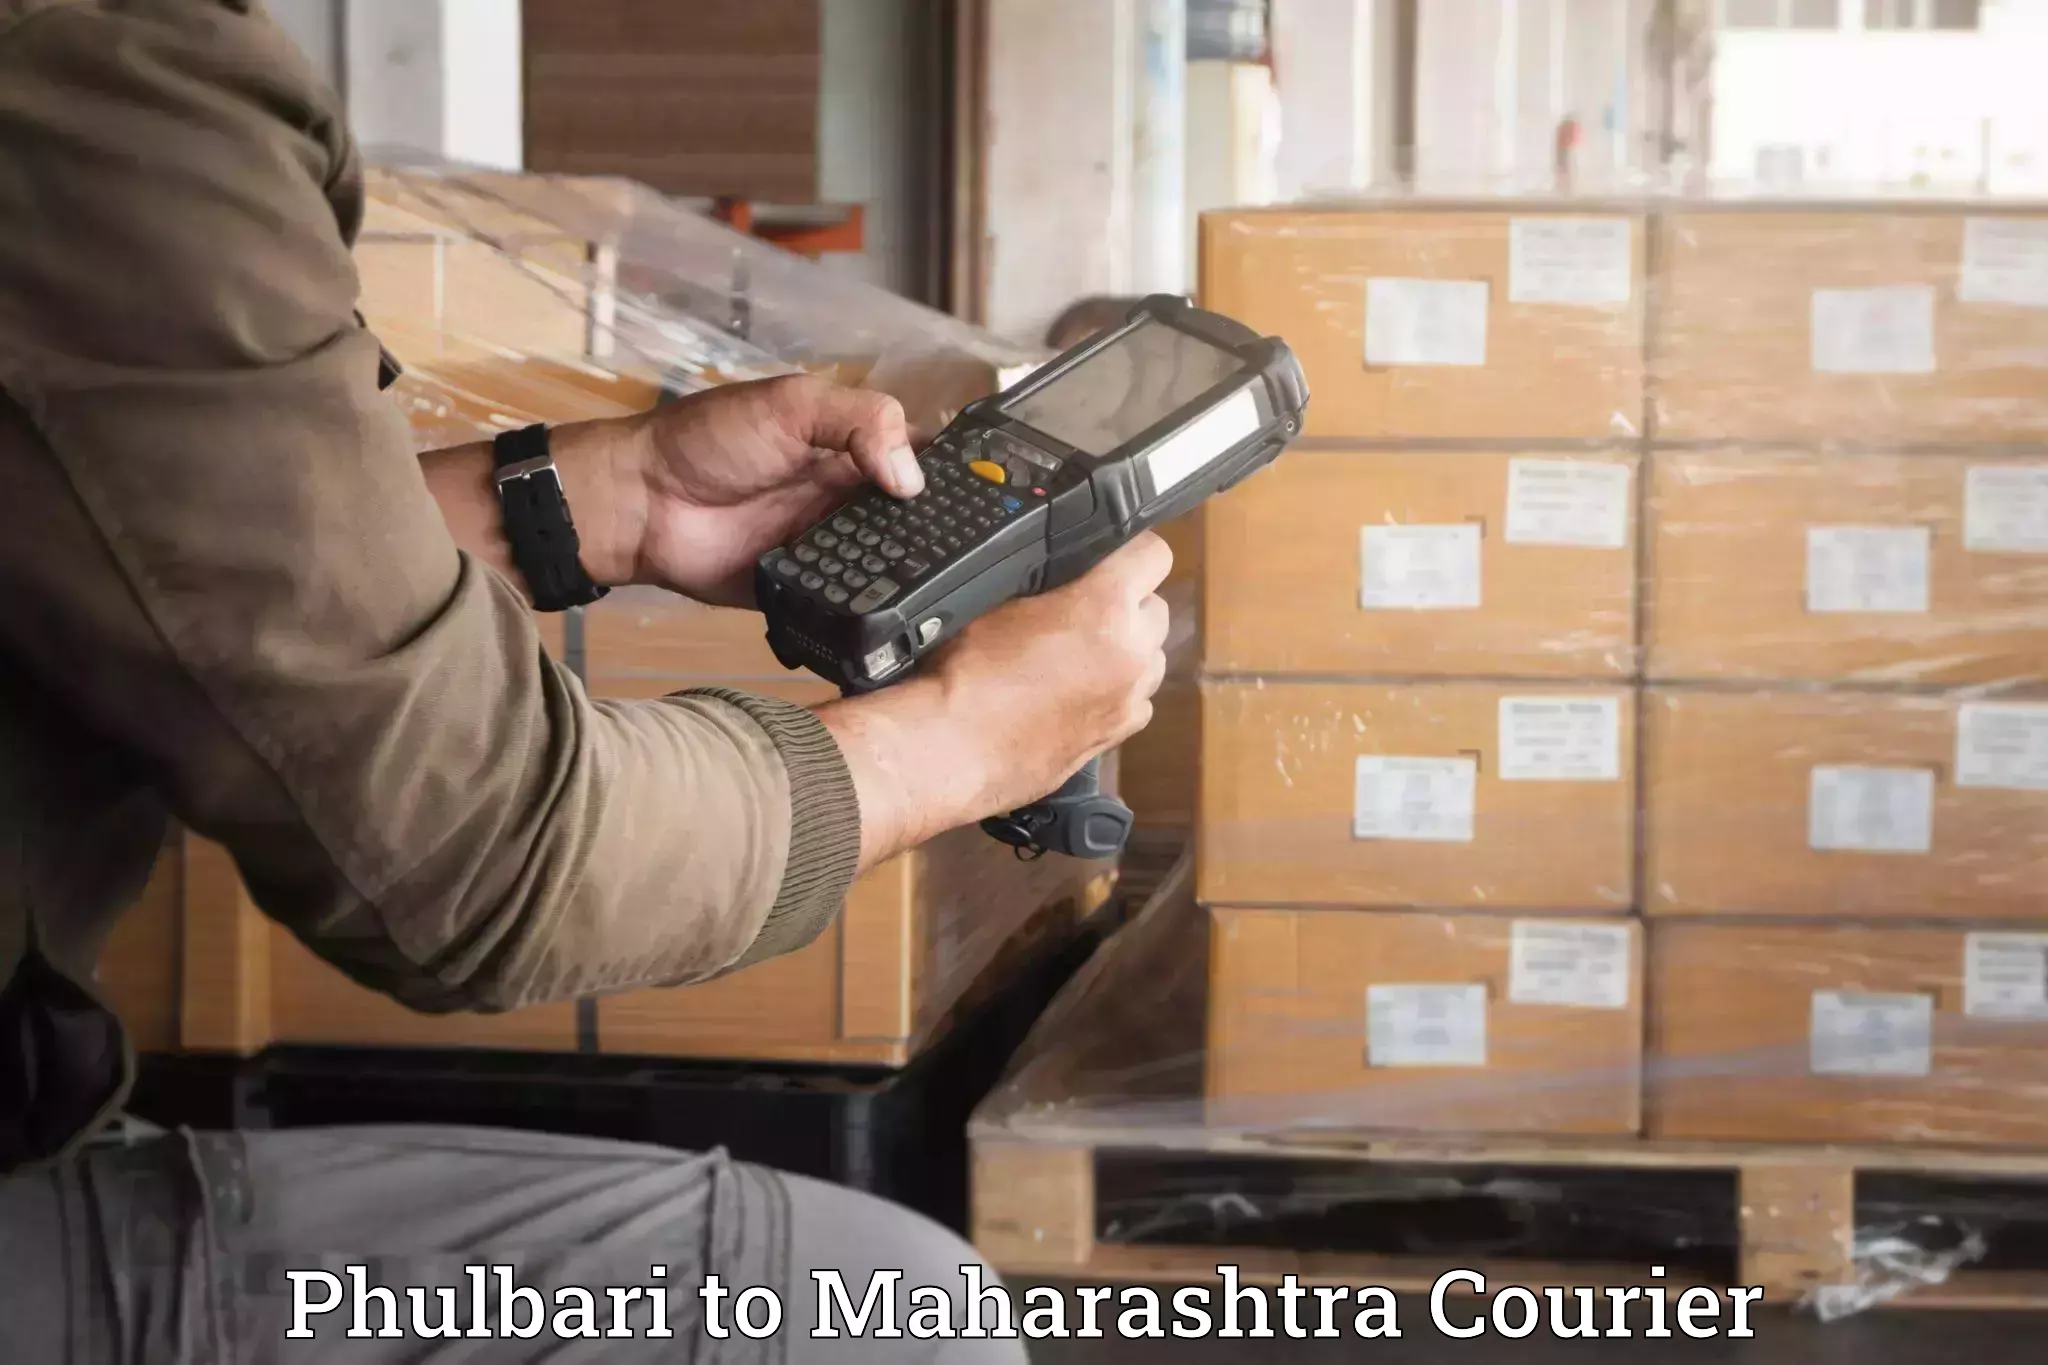 Furniture delivery service Phulbari to Maharashtra